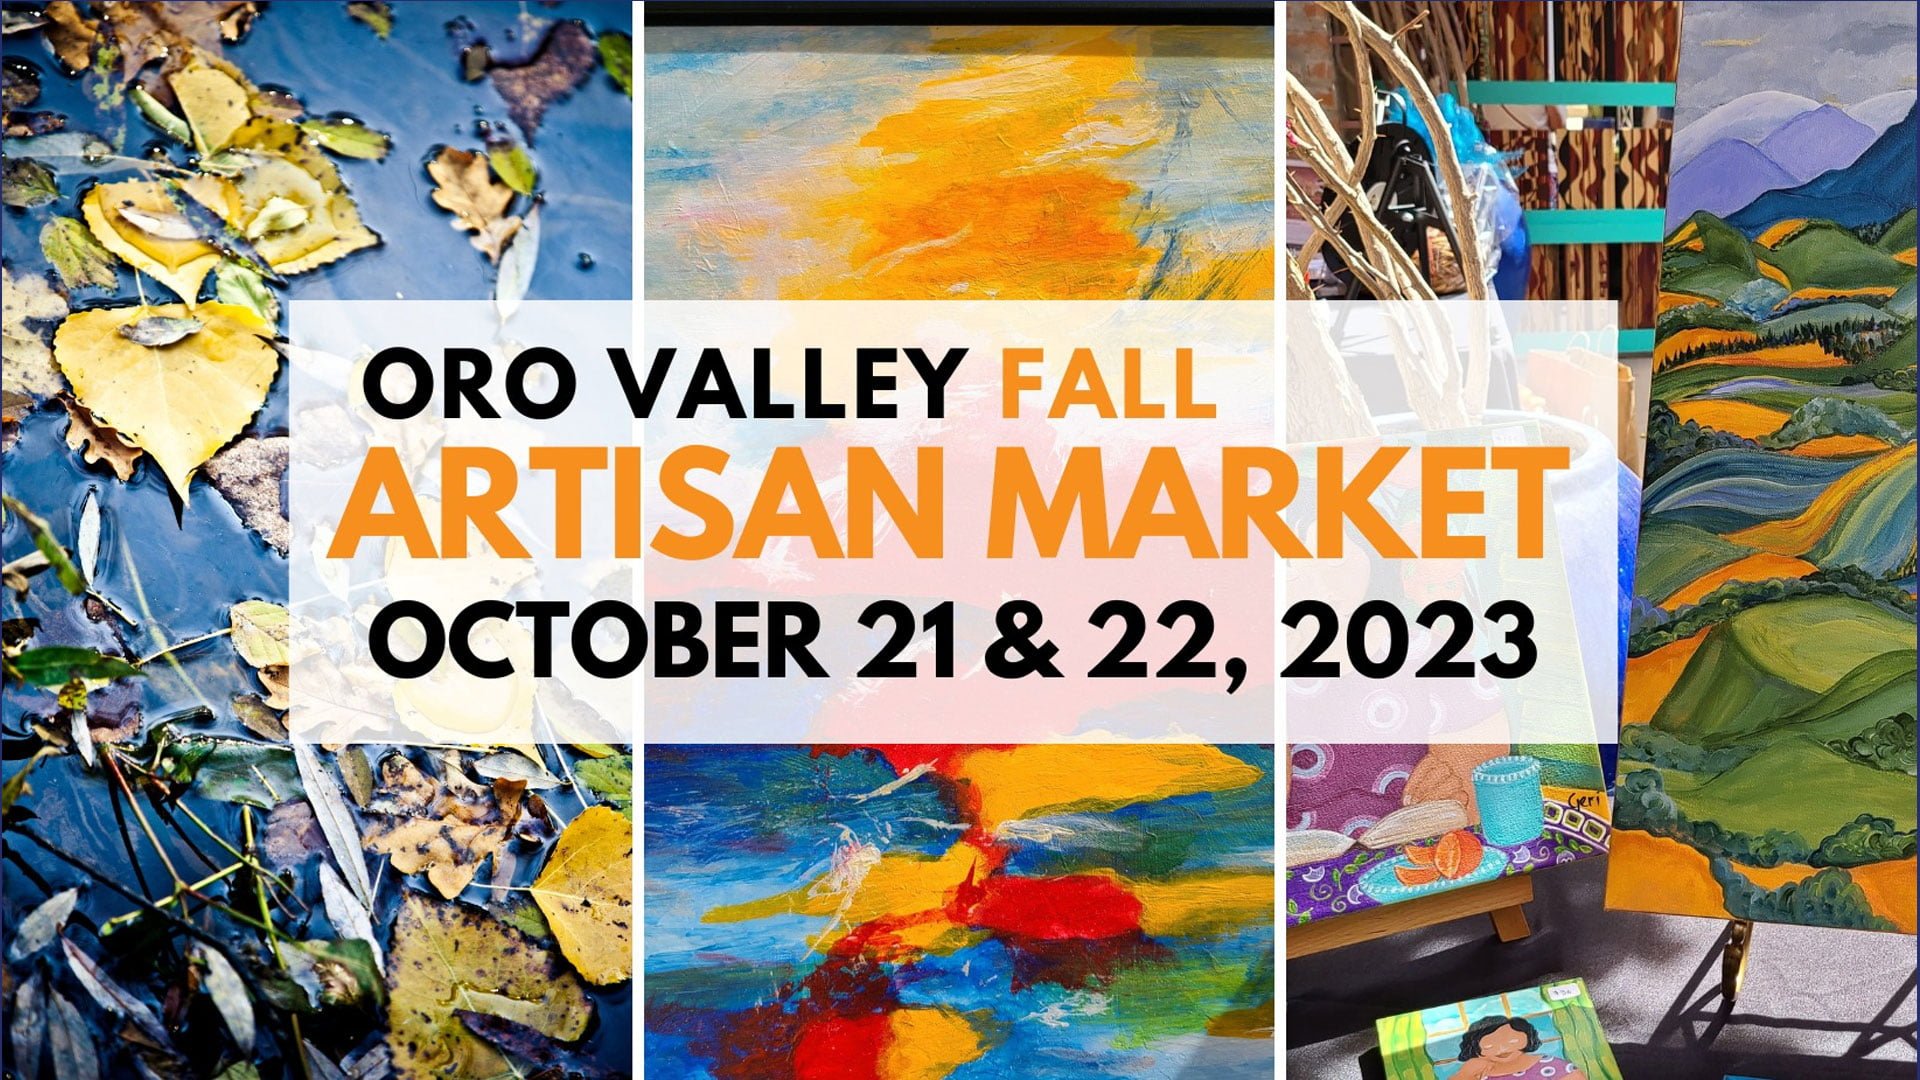 Oro valley fall artisan market